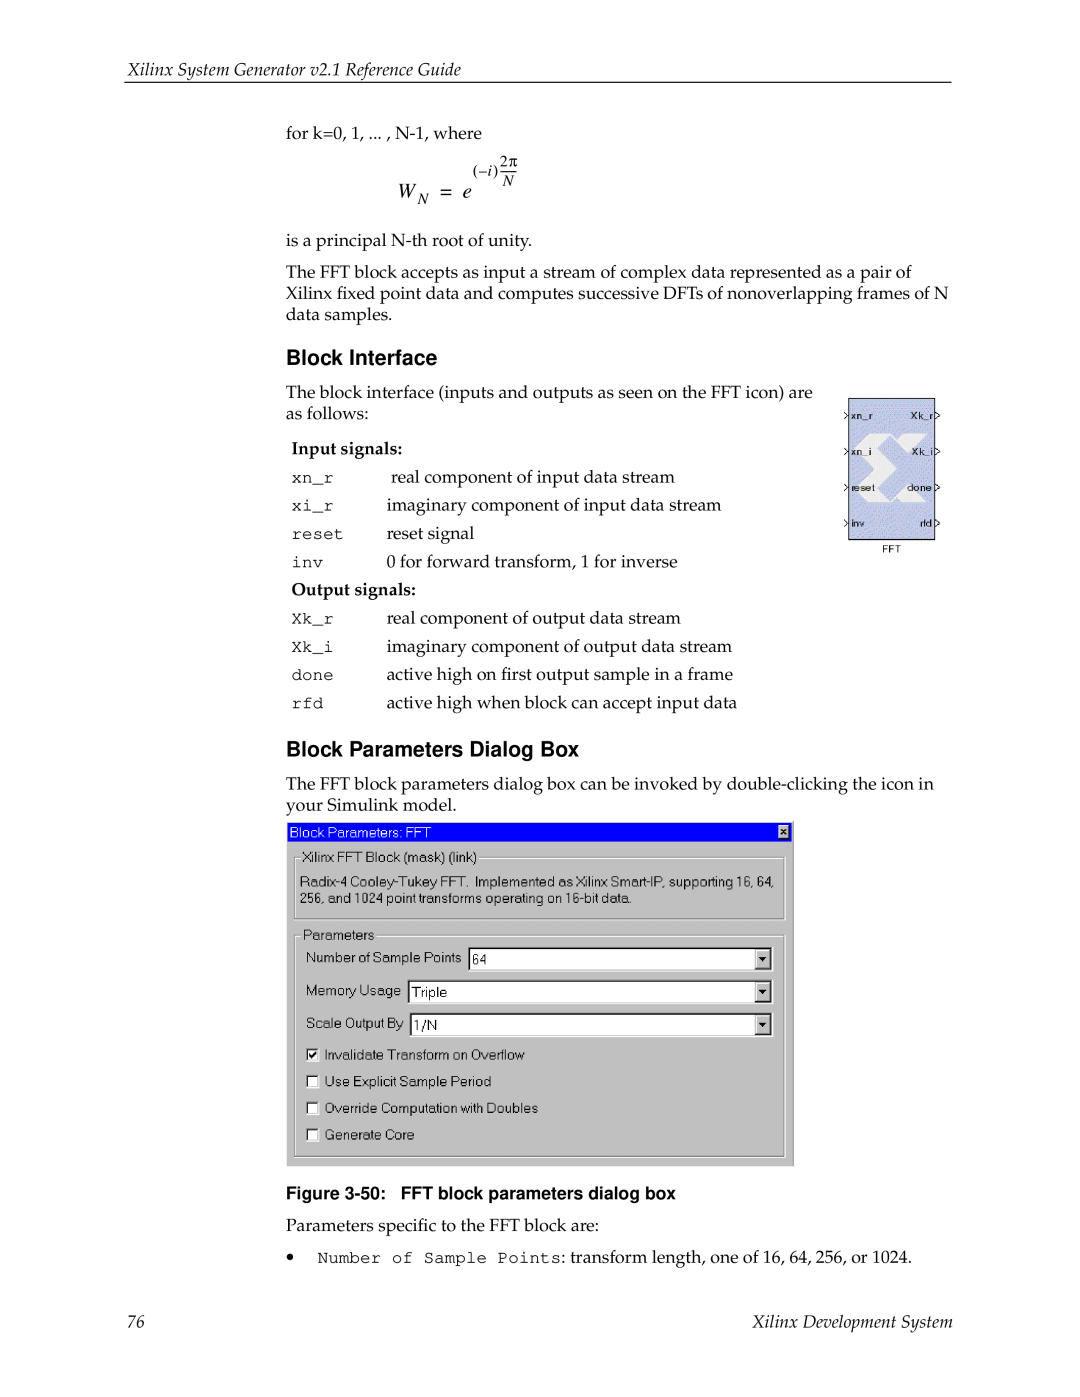 Xilinx V2.1 manual W N = e, Block Interface, Block Parameters Dialog Box, Xilinx System Generator v2.1 Reference Guide 